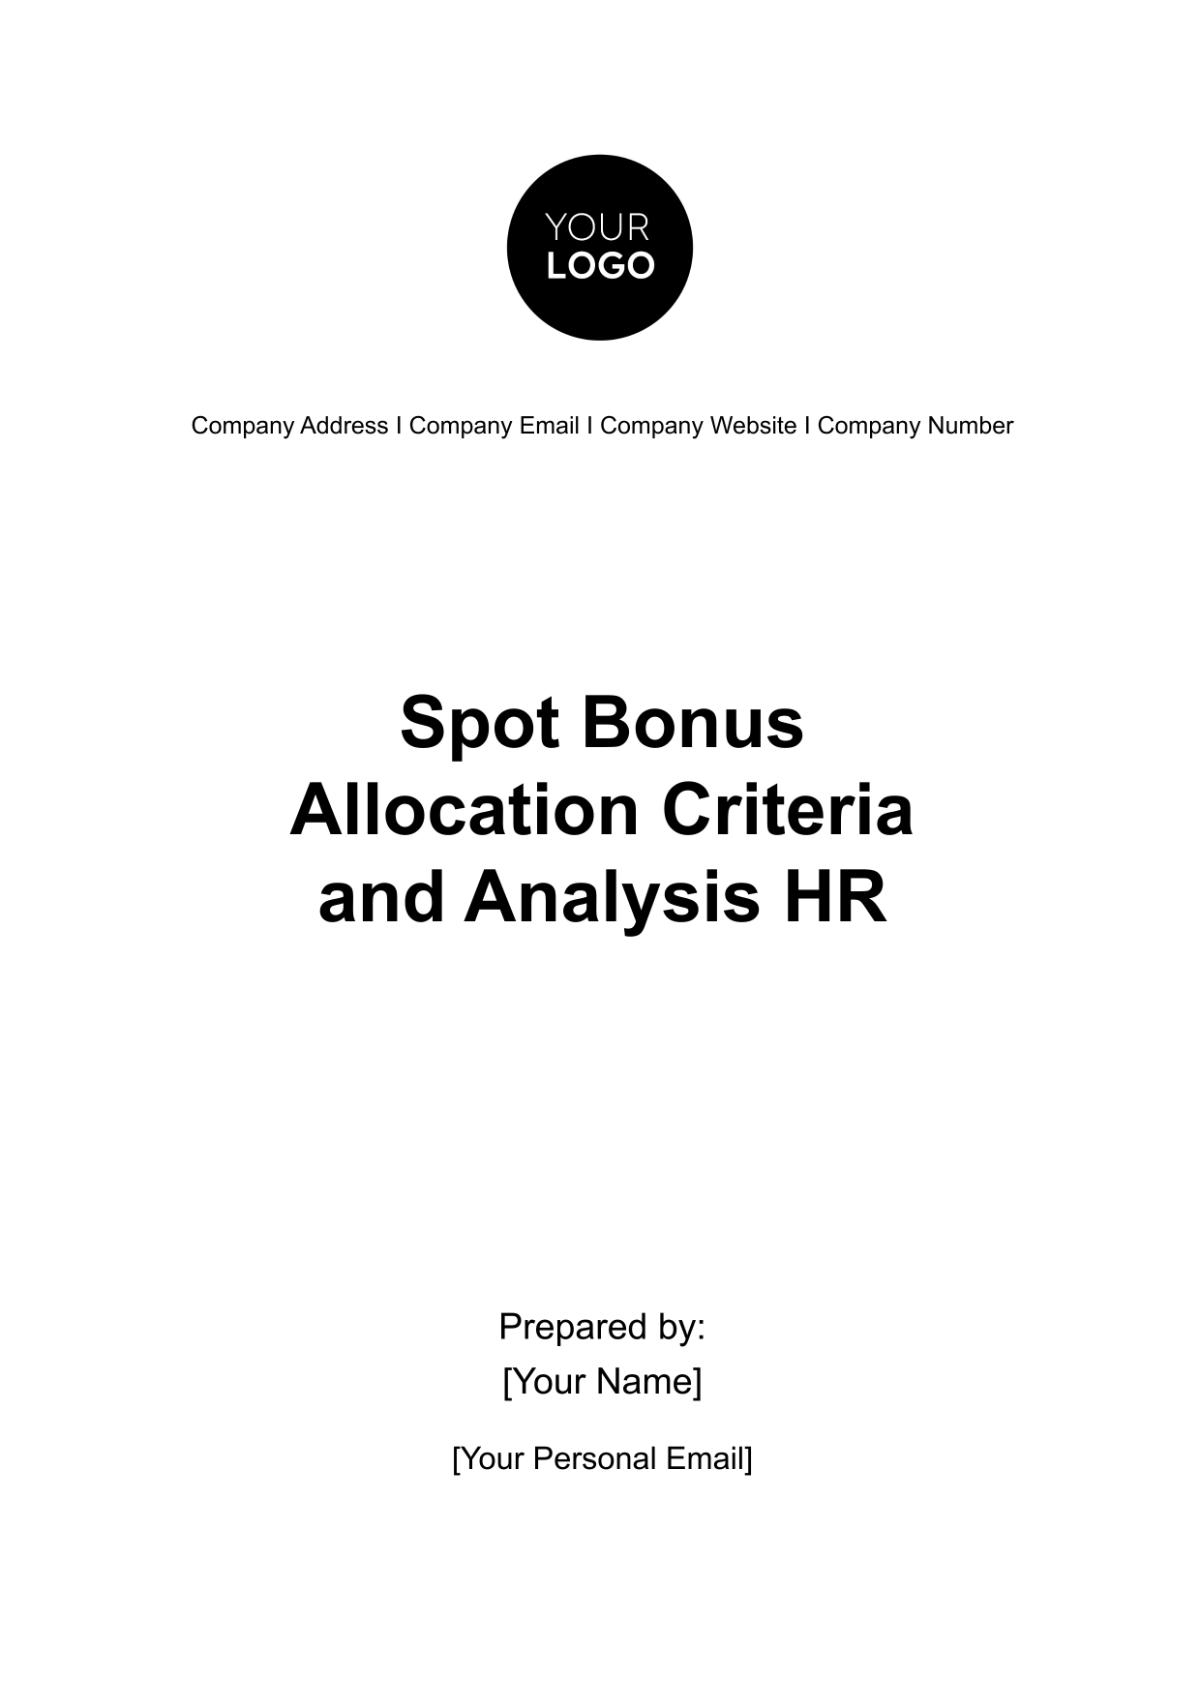 Spot Bonus Allocation Criteria and Analysis HR Template